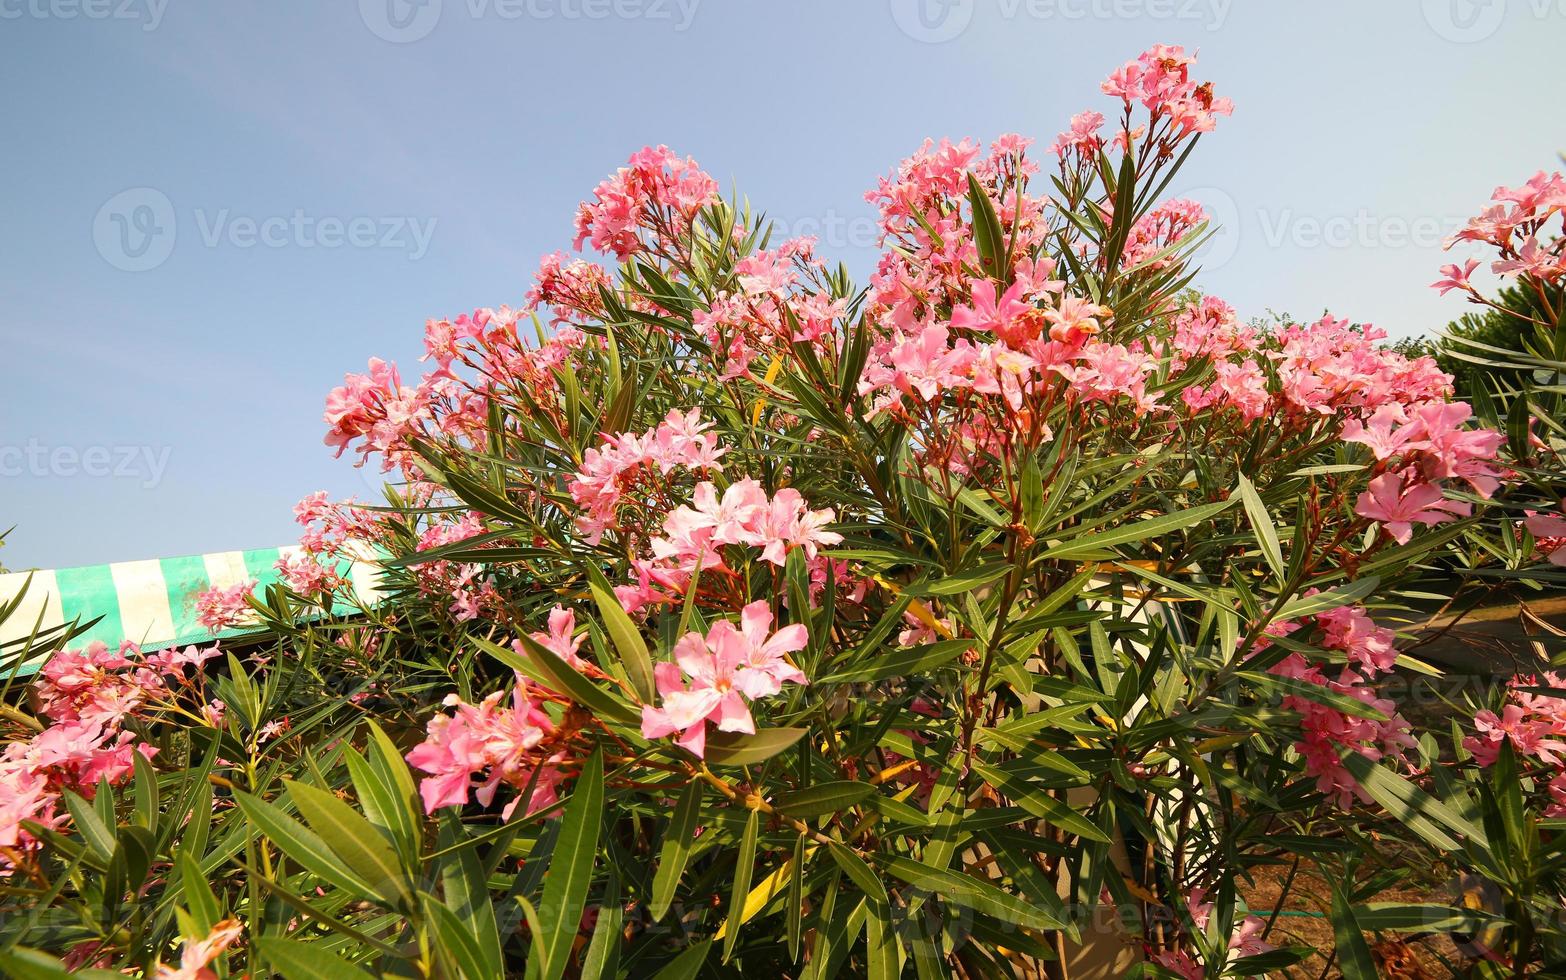 oleanderplant met prachtig gekleurde bloemen foto